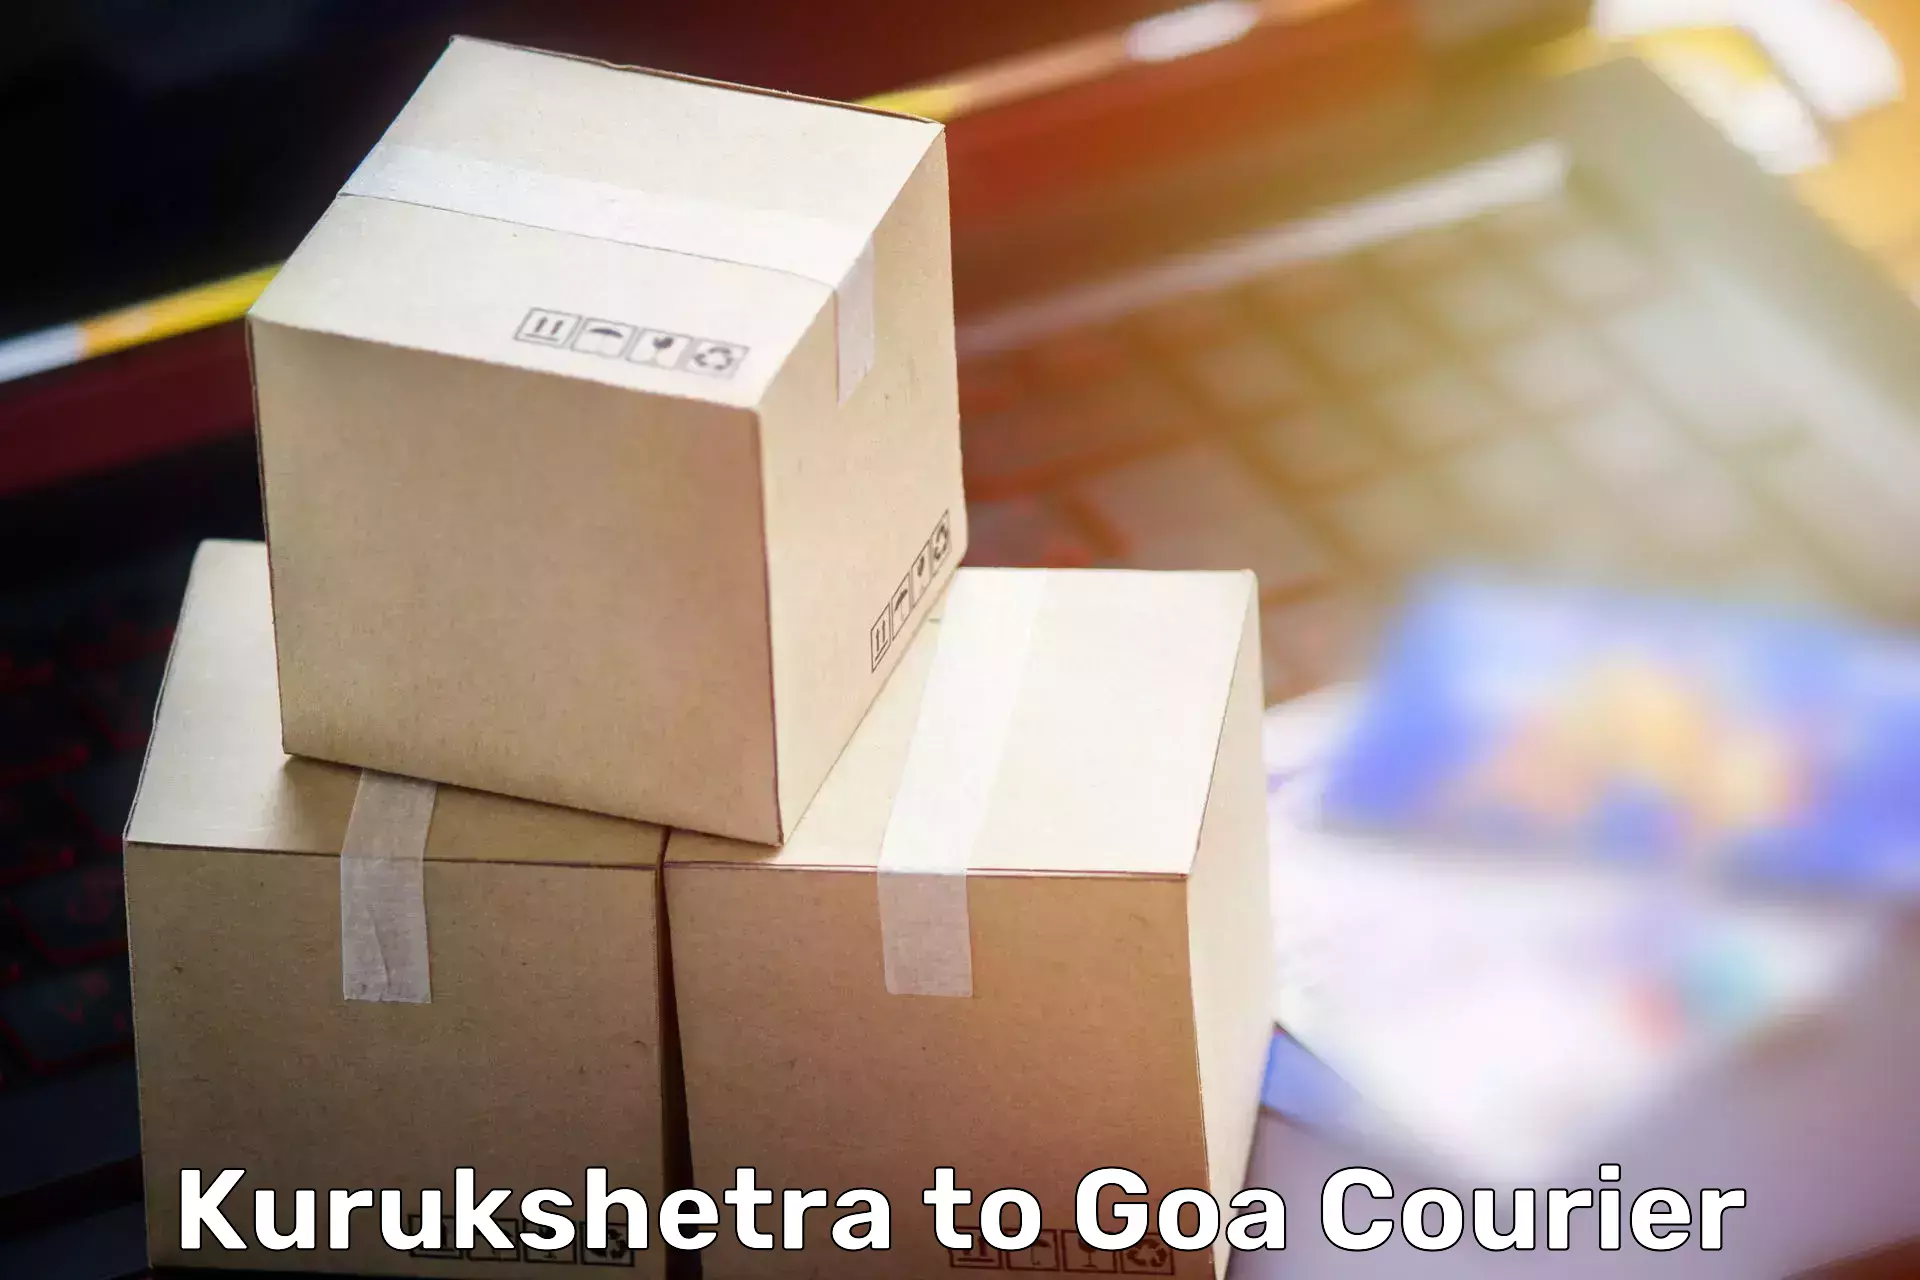 Professional moving company Kurukshetra to Goa